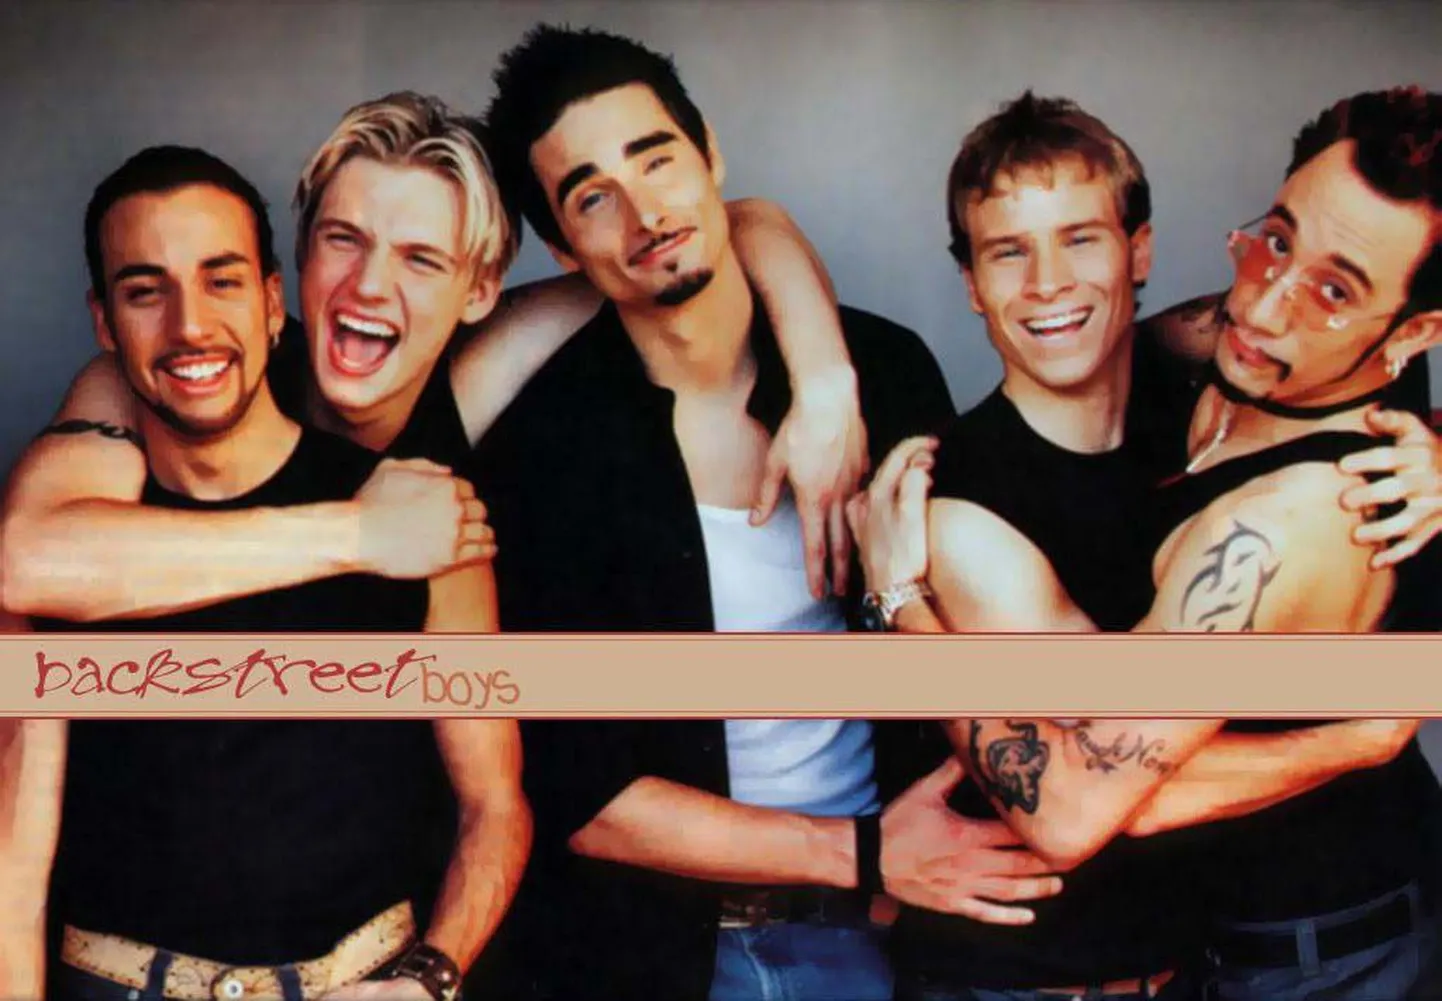 Ansambel Backstreet Boys.